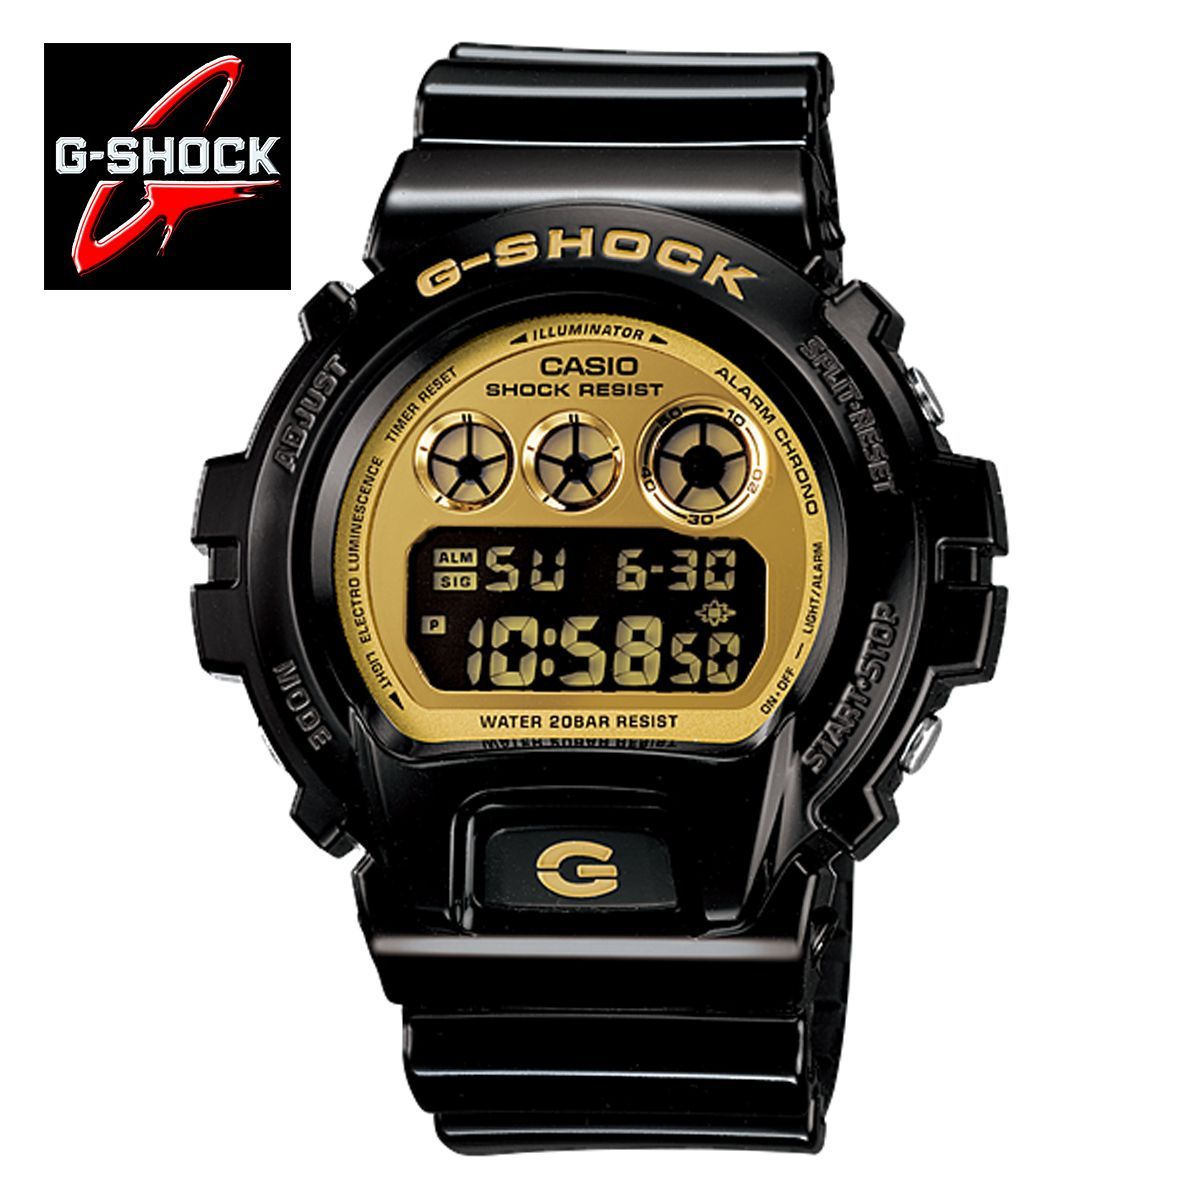 G-SHOCK ジーショック CASIO カシオ 腕時計 クレイジーカラーズ ブラック×ゴールド 三つ目デジタル スラッシャー 定番モデル アラーム  タイマー ストップウォッチ バックライト 038net【平日15時〆即日発送】 メルカリ